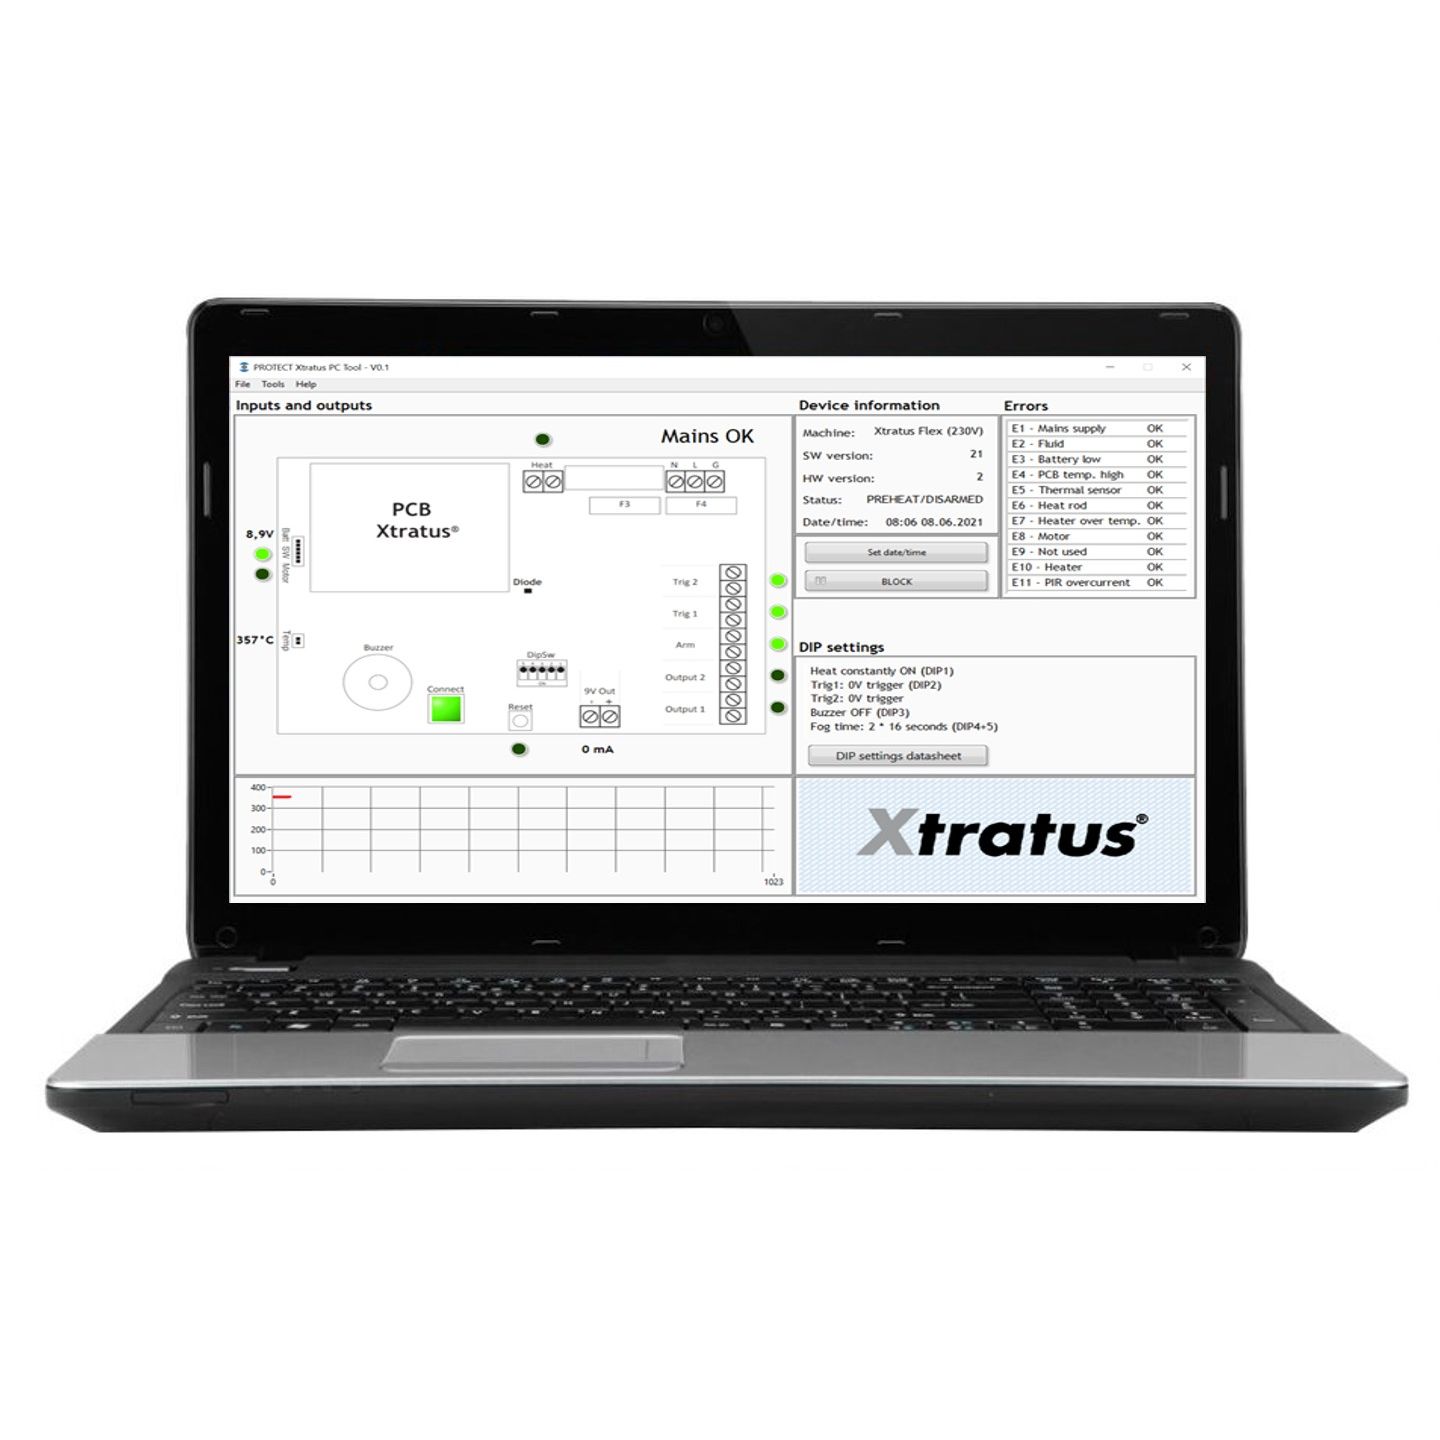 ™PROTECT Xtratus PC Tool